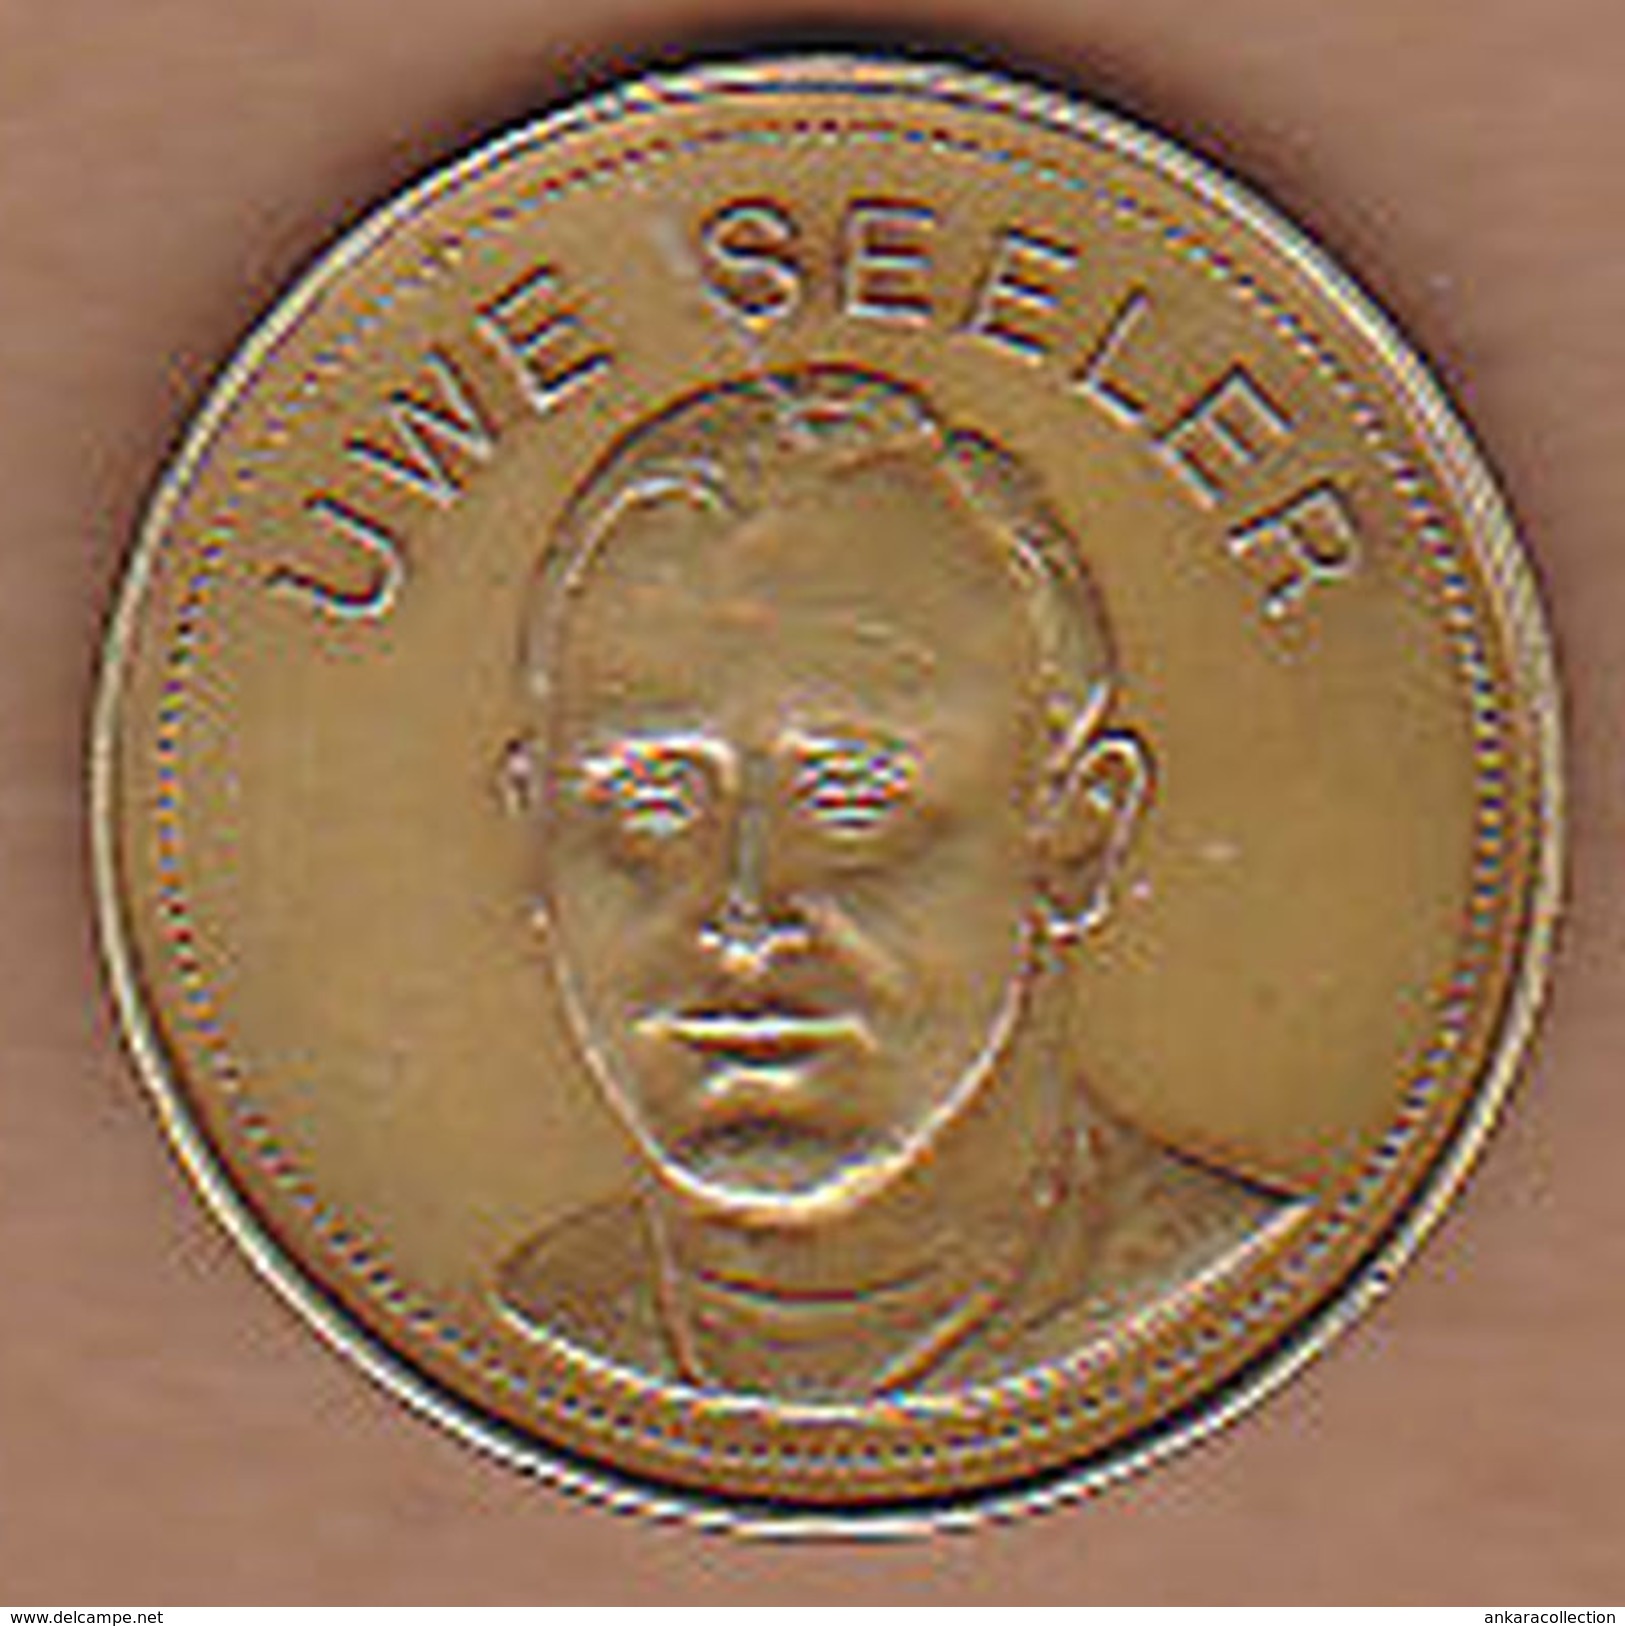 AC - UWE SEELER TRAUM ELF 1968 SHELL TOKEN - JETON - Monedas / De Necesidad